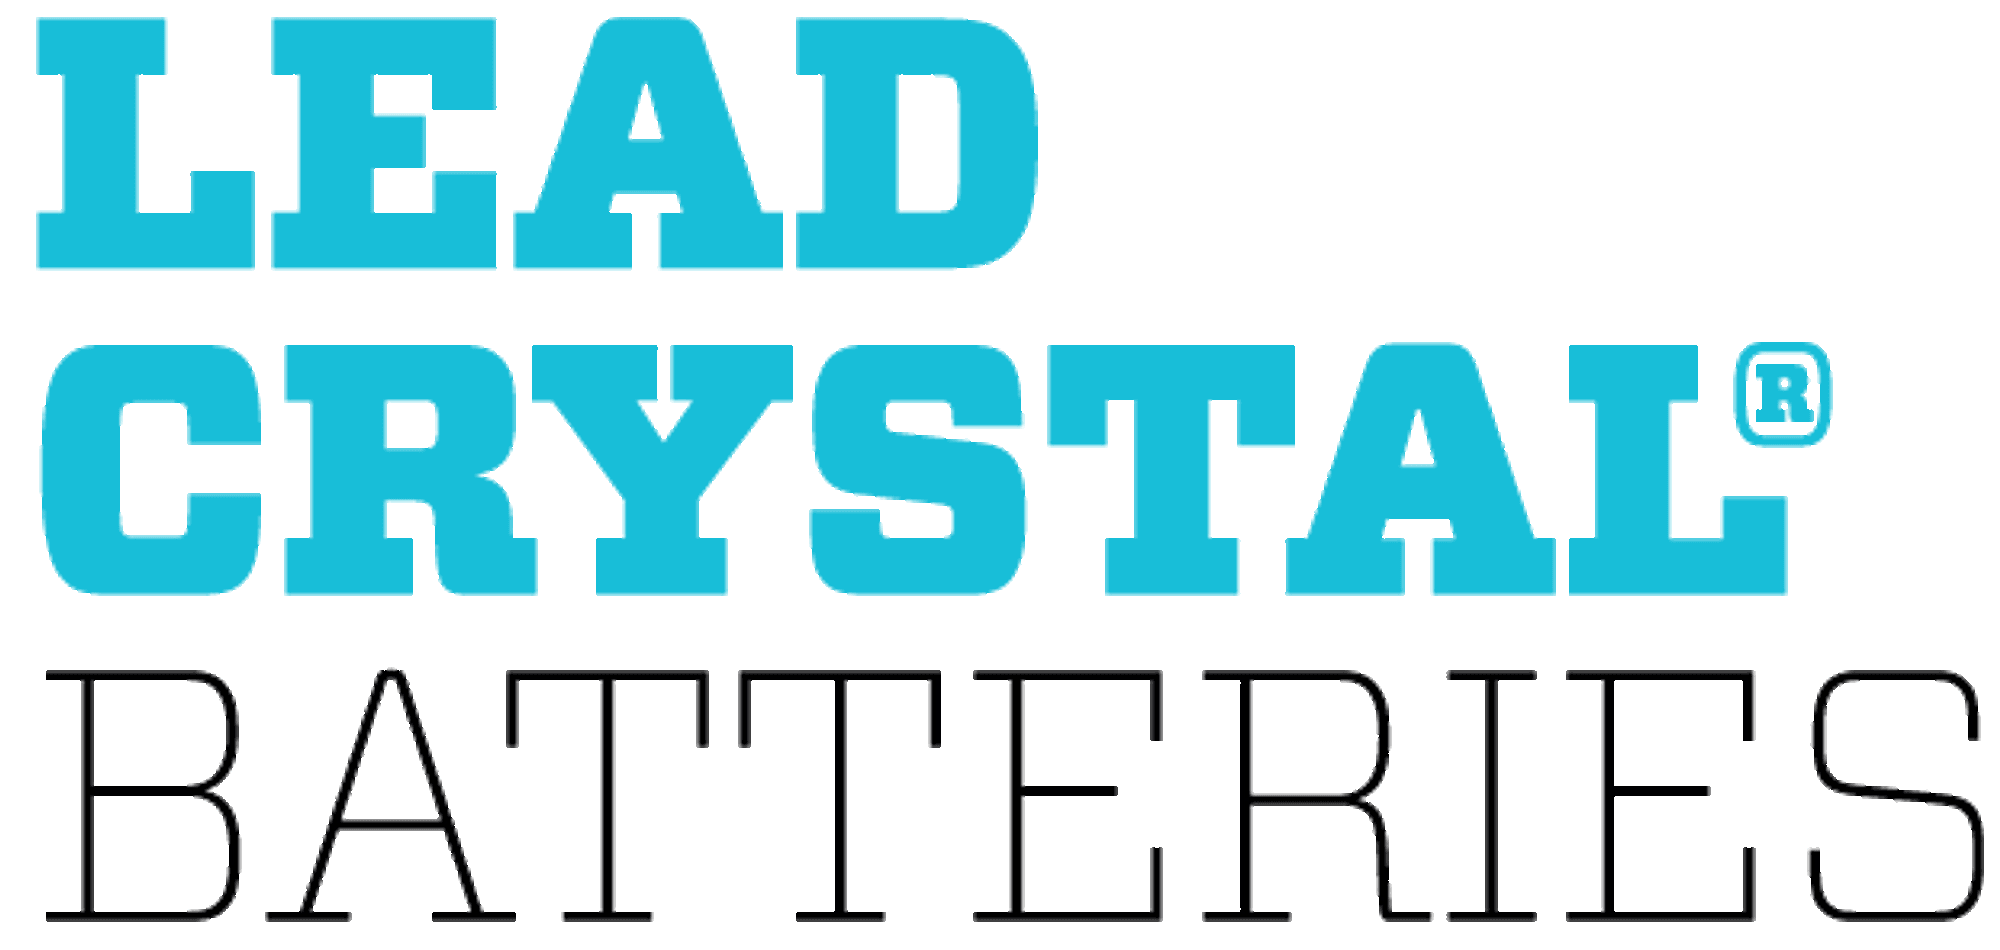 LeadCrystal